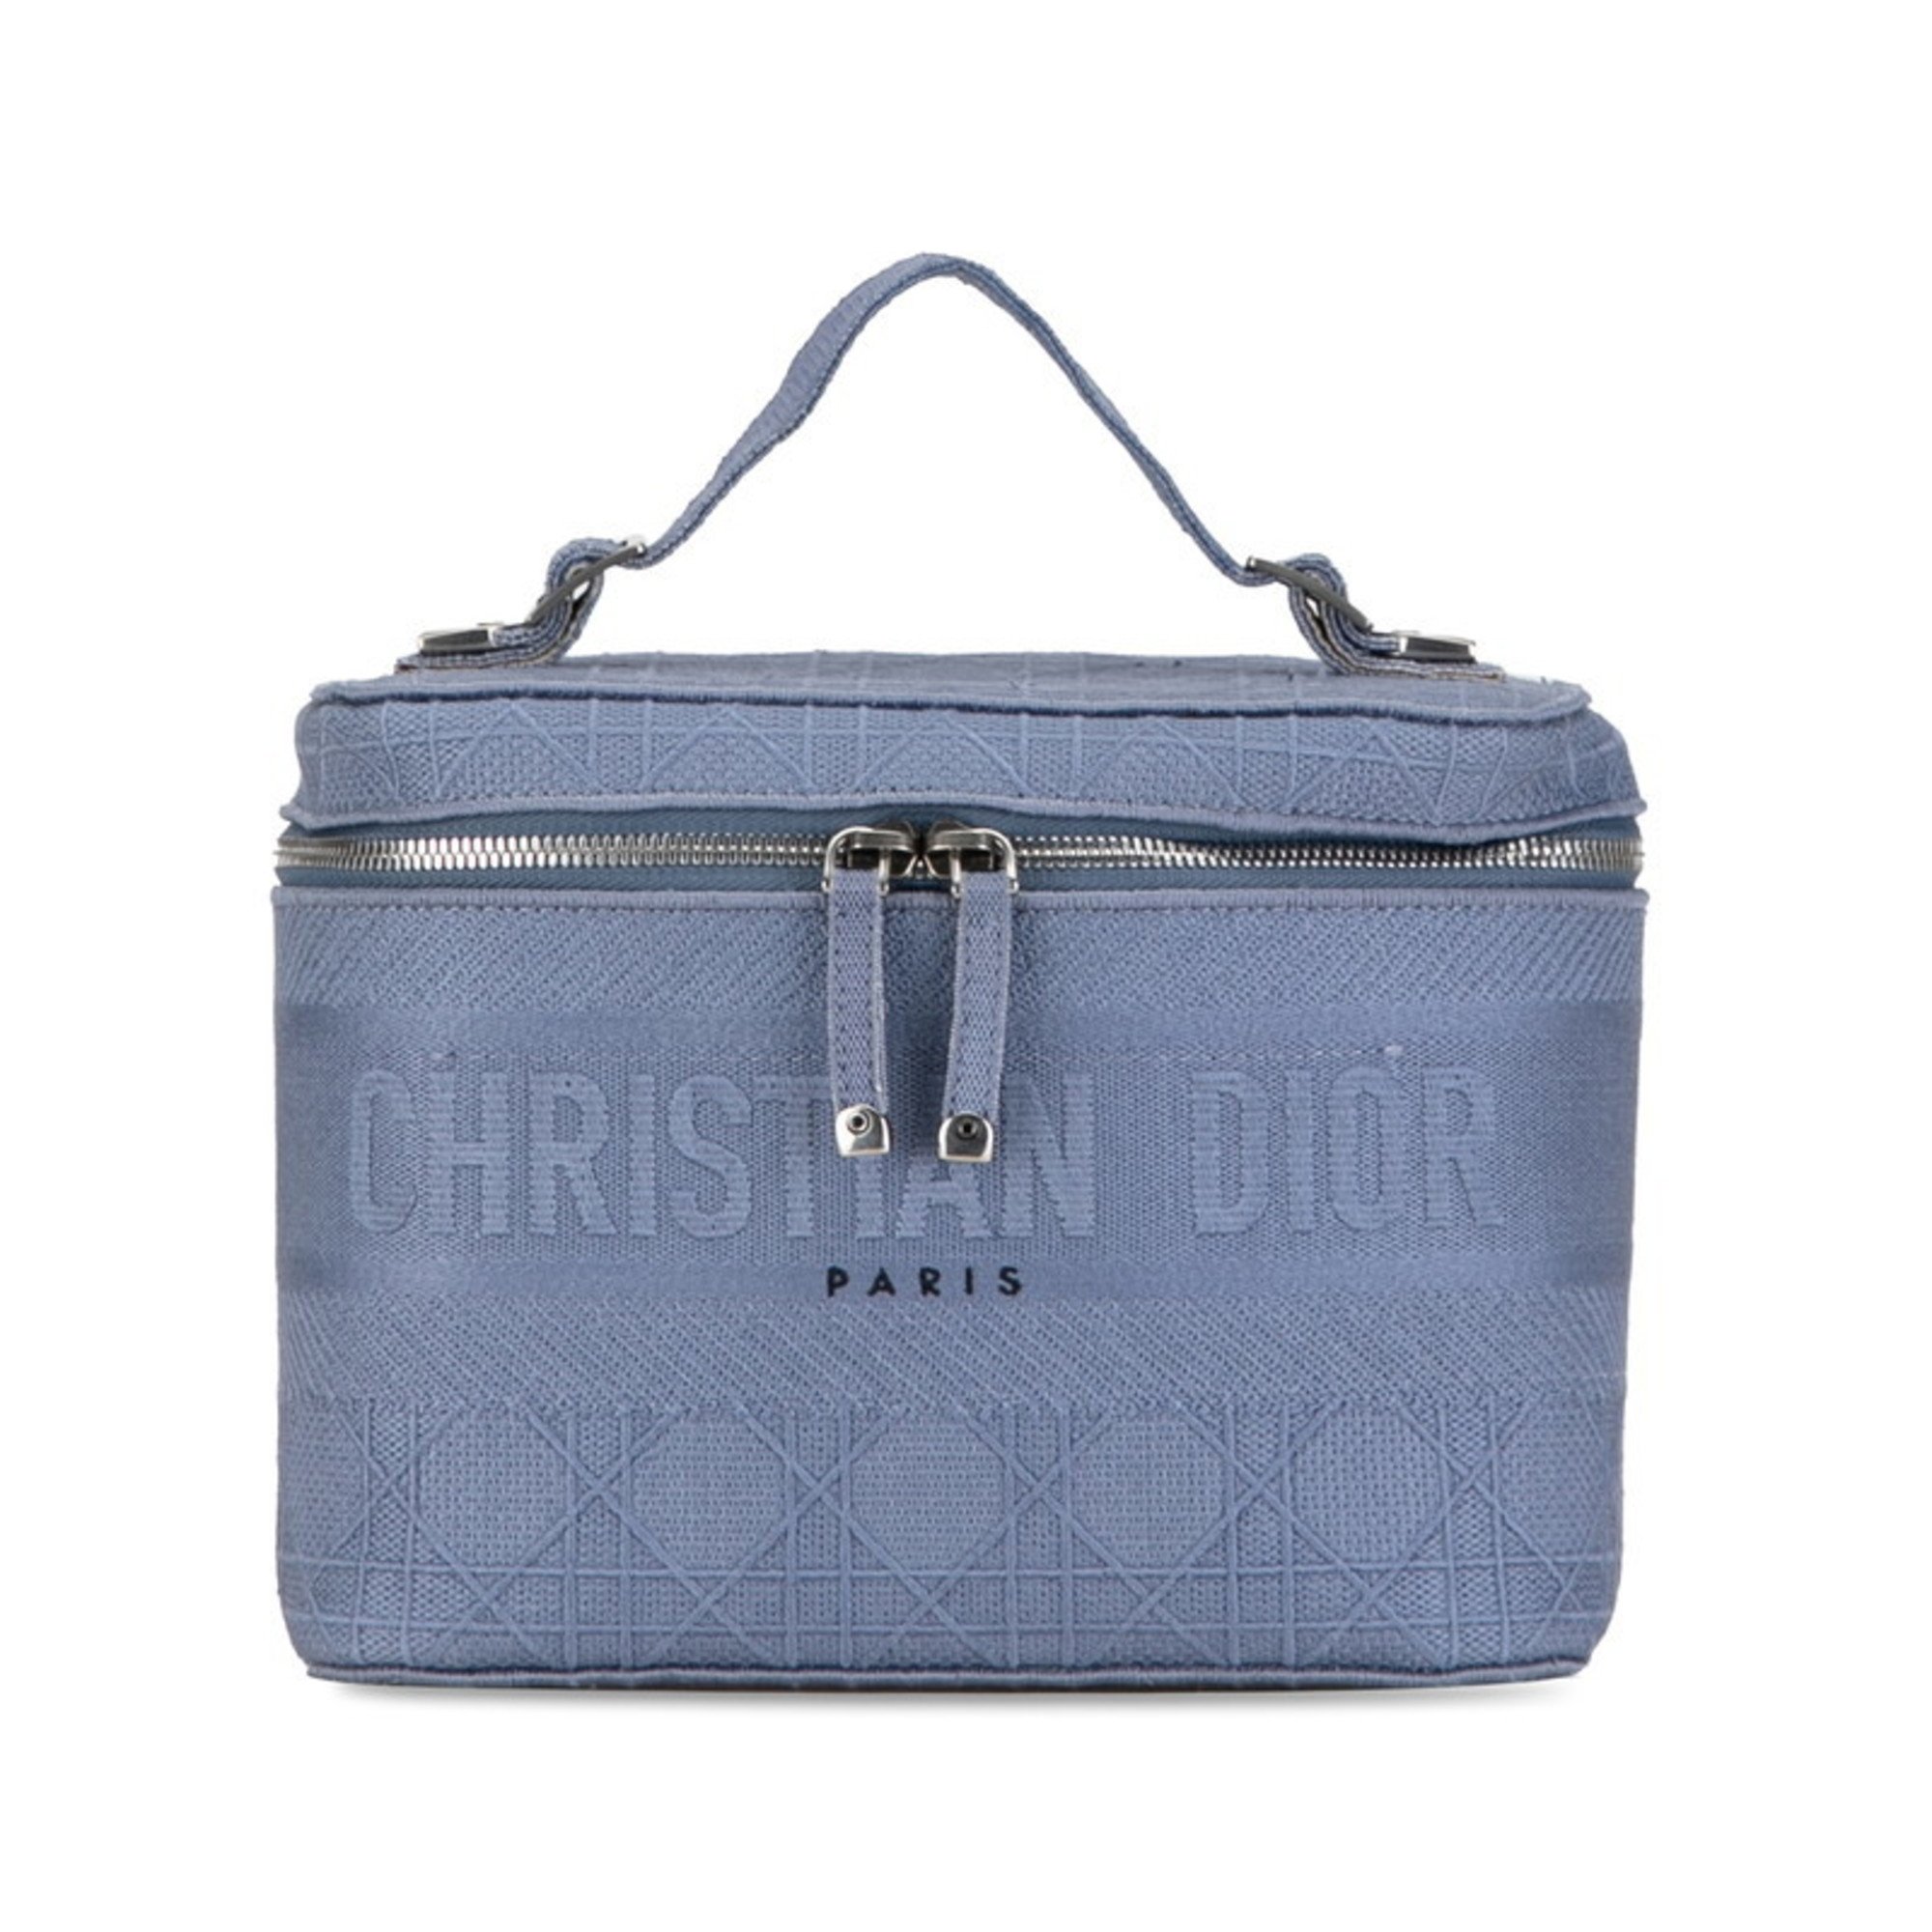 Christian Dior Dior Cannage Embroidery Vanity Bag Handbag Blue Purple Jacquard Women's